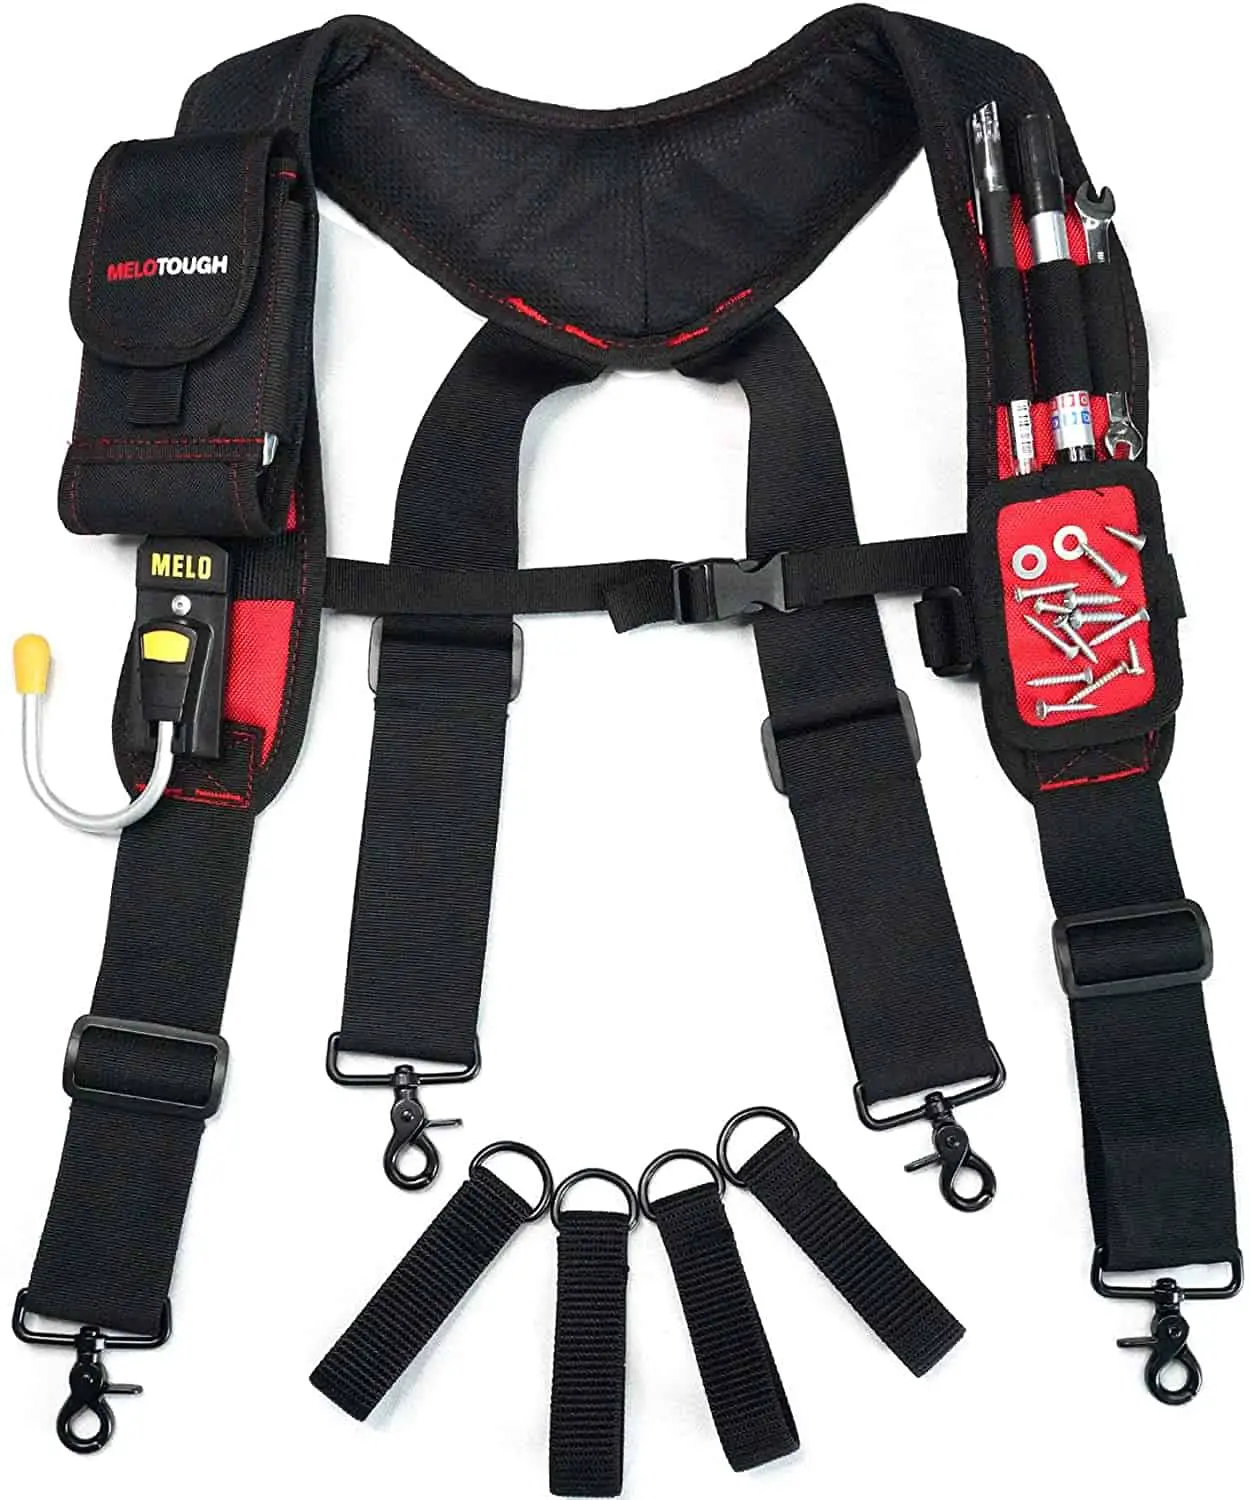 Best magnetic tool belt suspenders- MELOTOUGH Magnetic Suspenders Tool Belt Suspenders